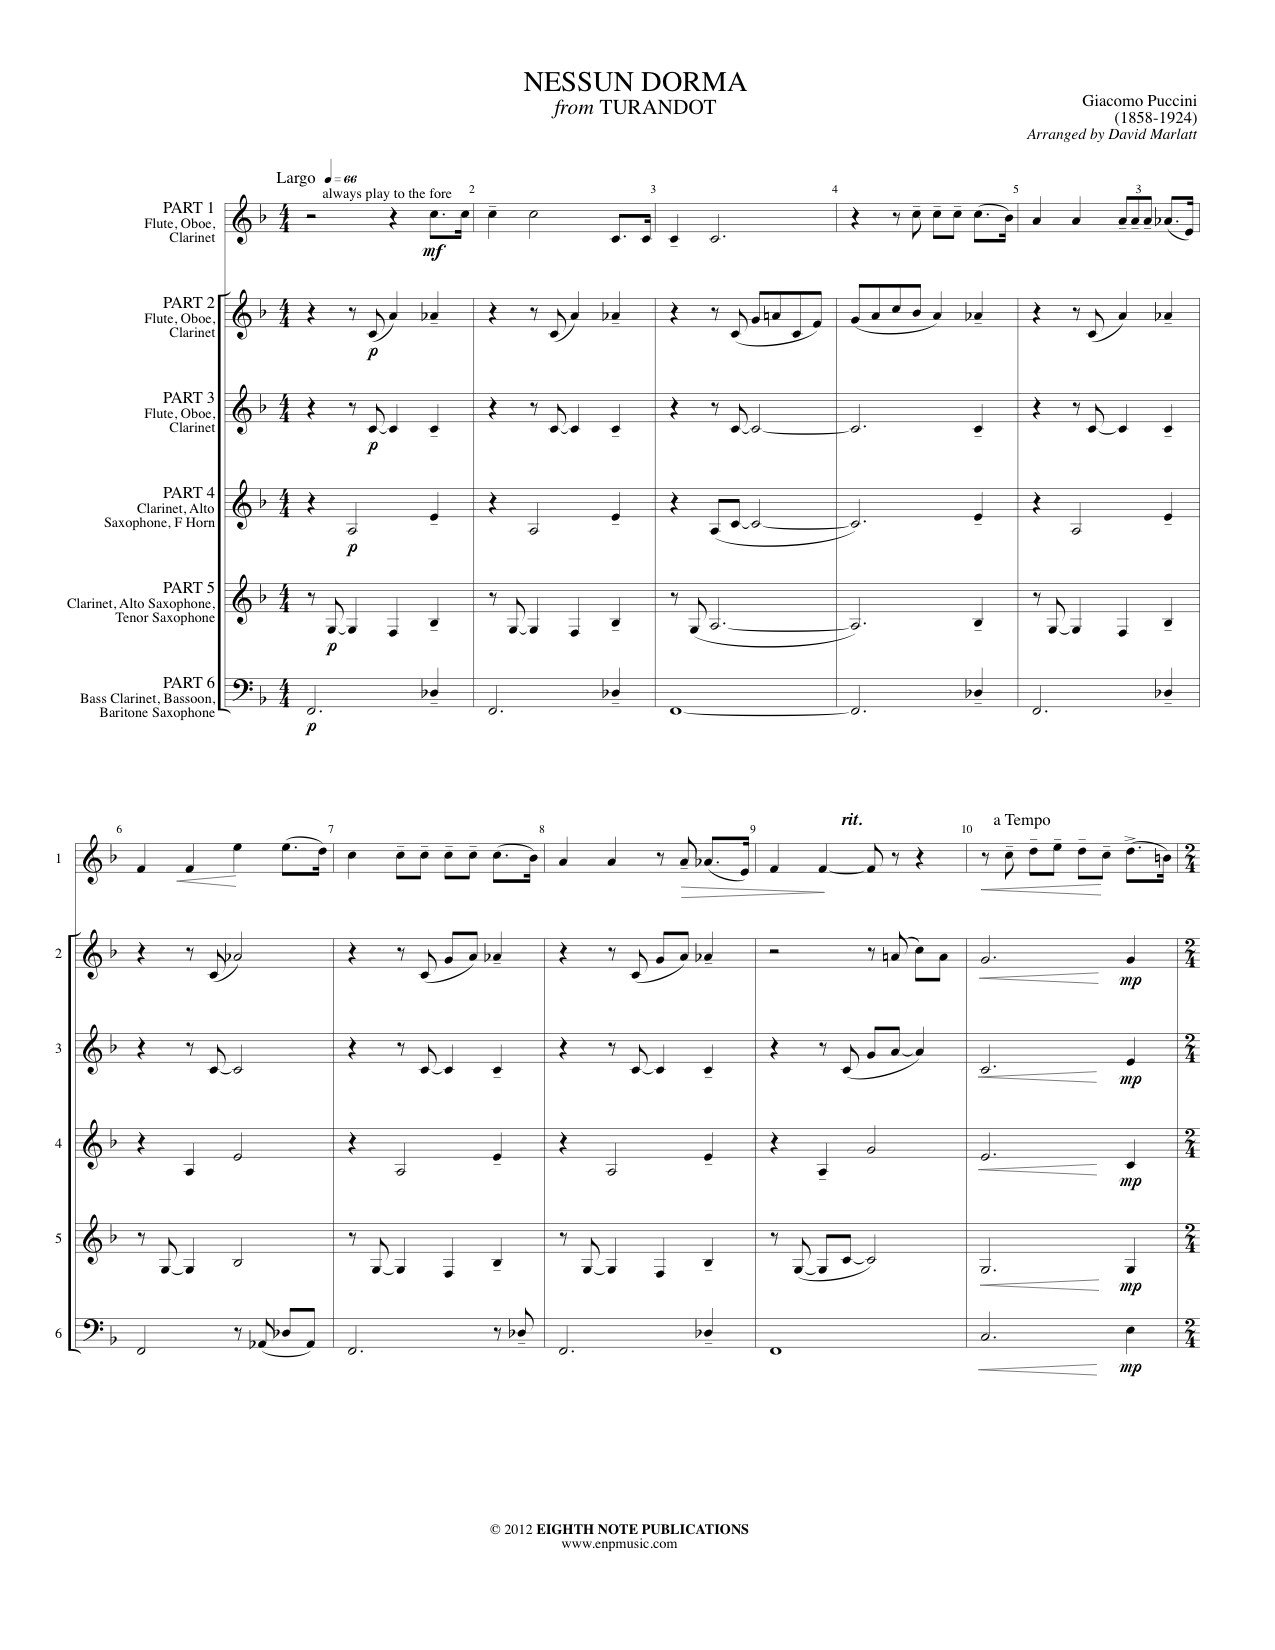 Nessun Dorma from Turandot - Giacomo Puccini